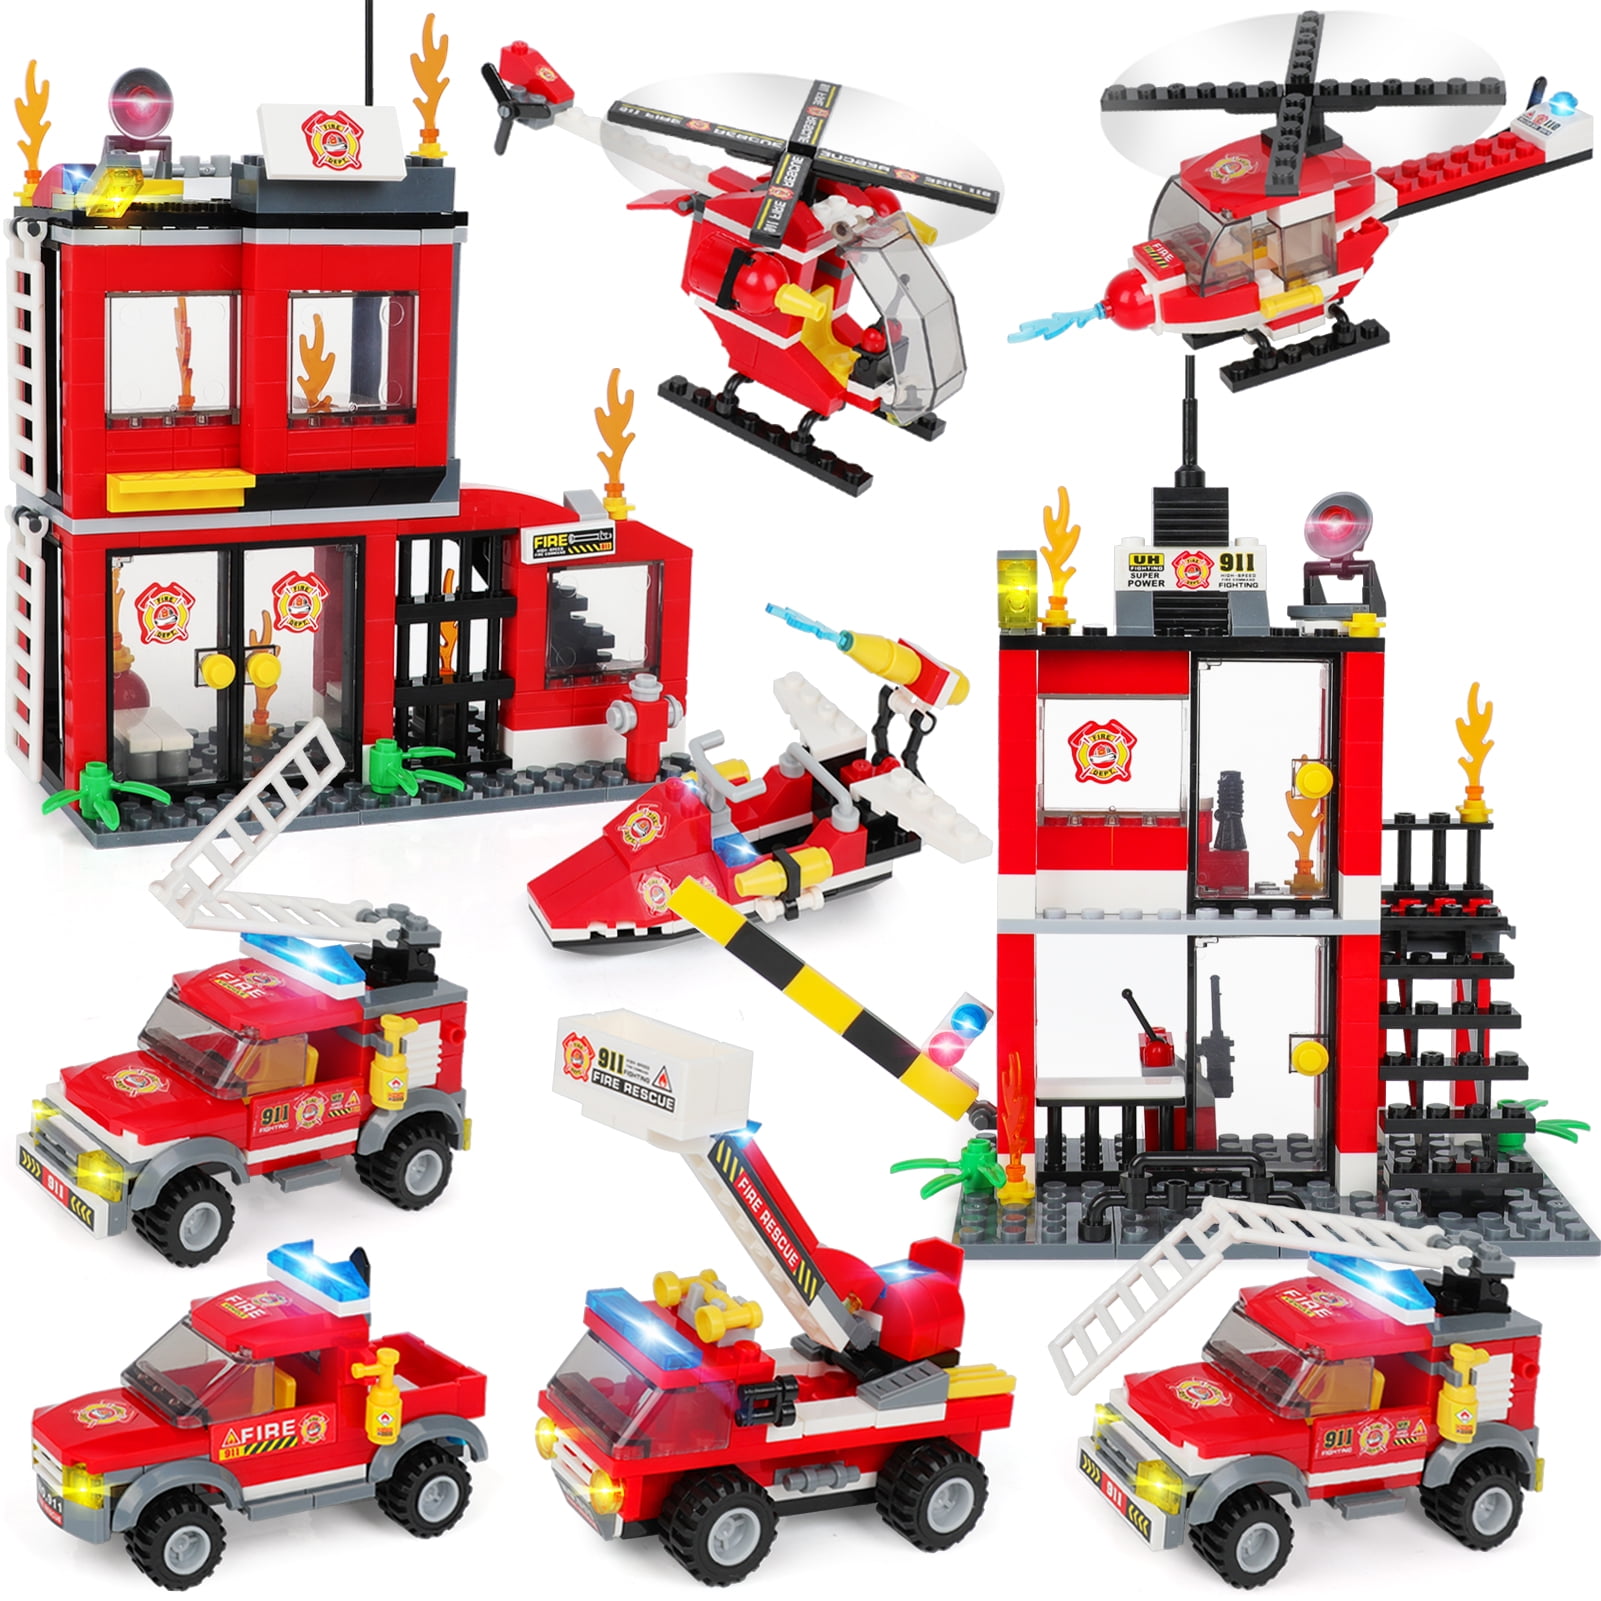 Fire Helicopter Educational Building Blocks Boy's Kids Children Bricks Toys Gift 